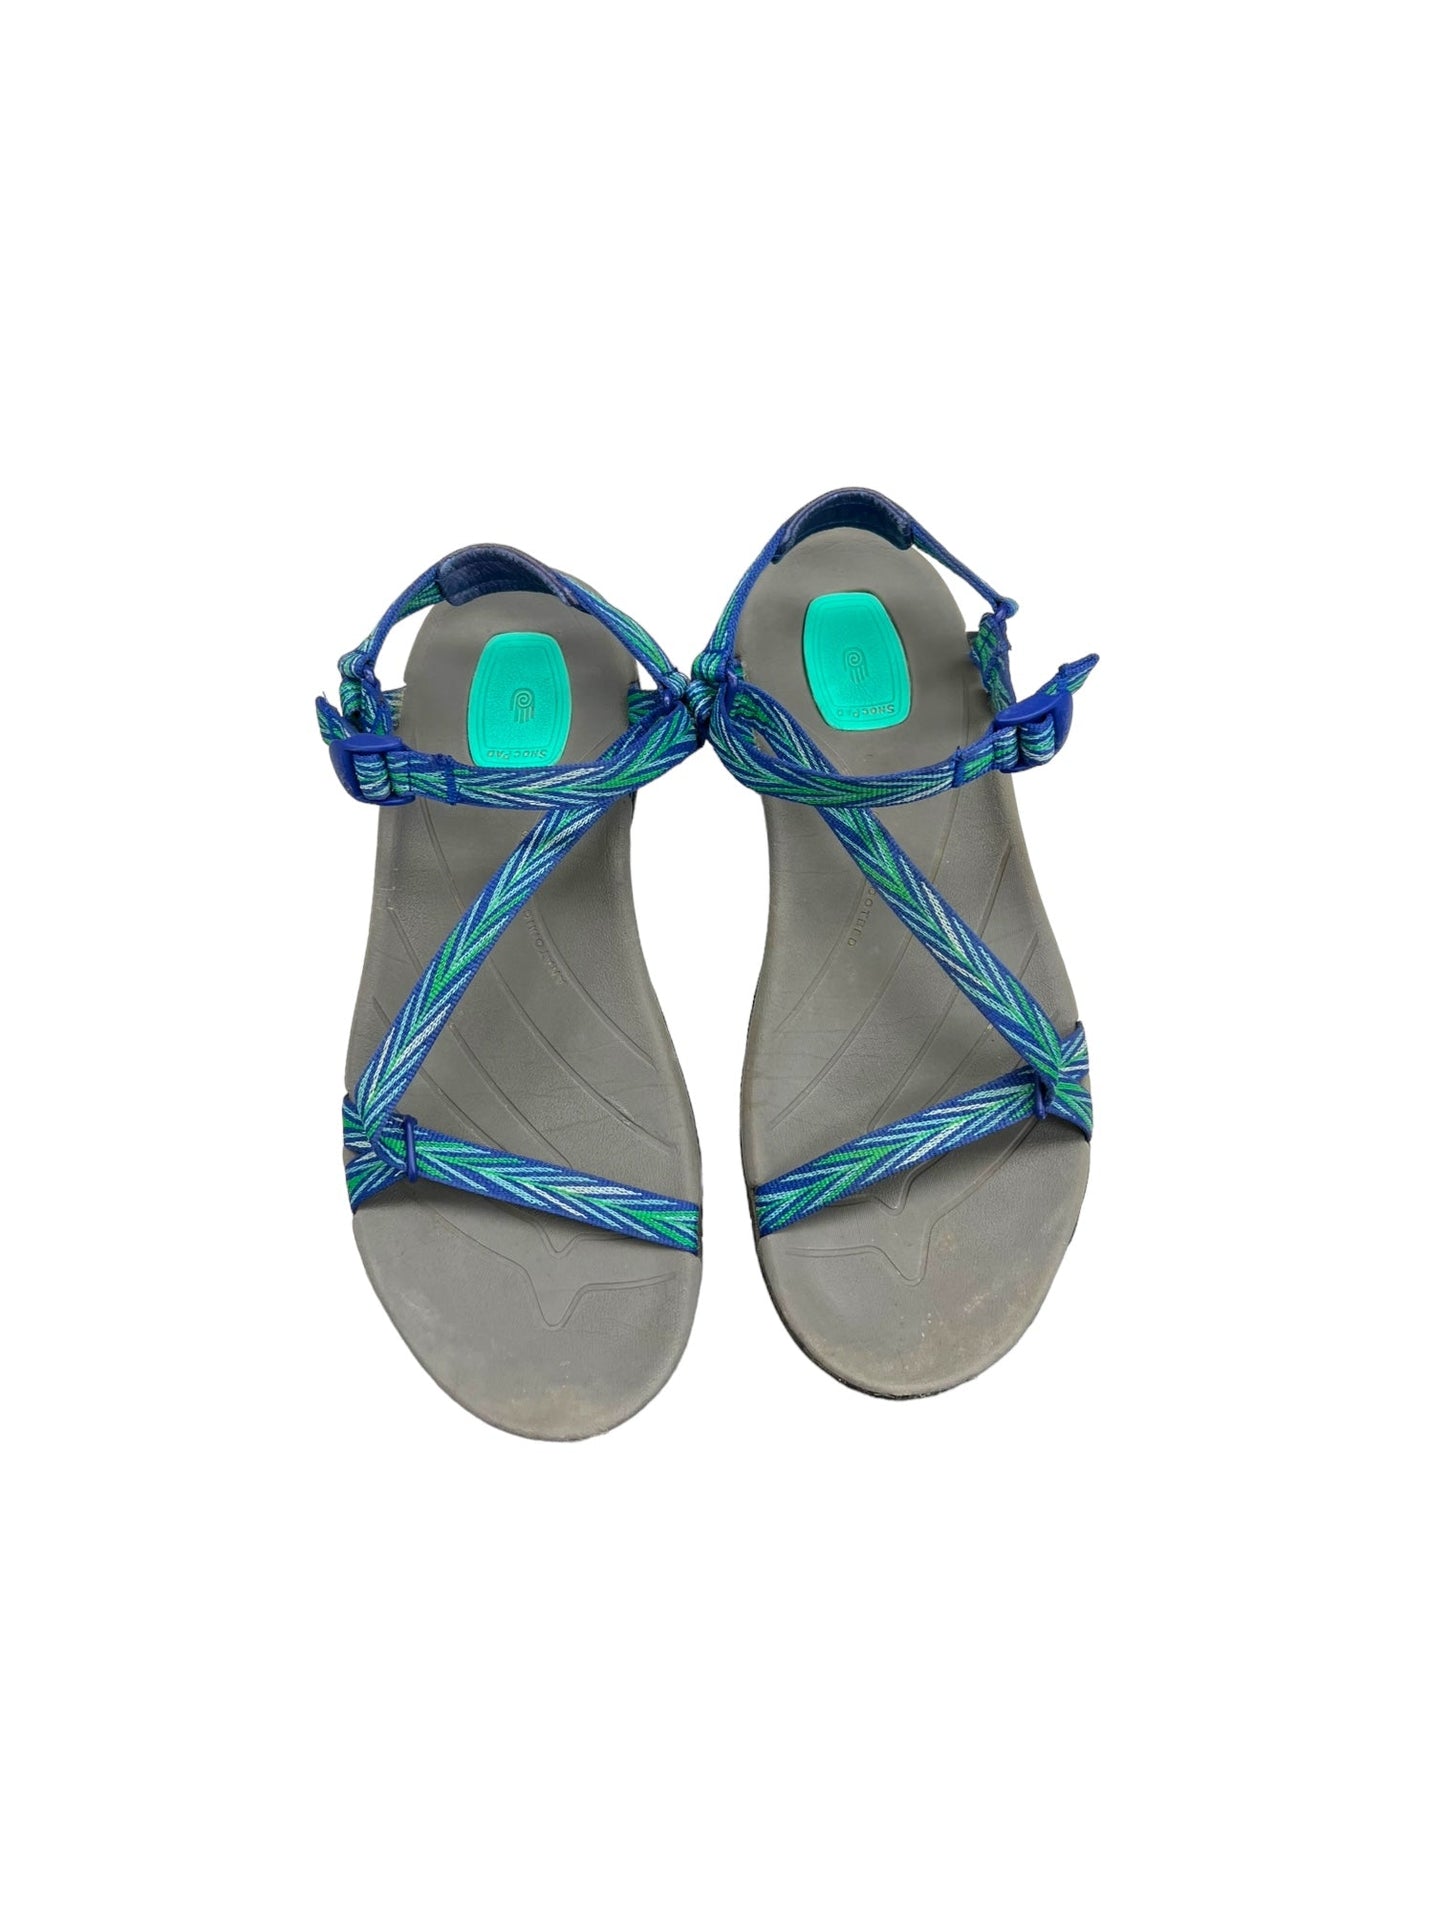 Blue & Green Sandals Flats Teva, Size 9